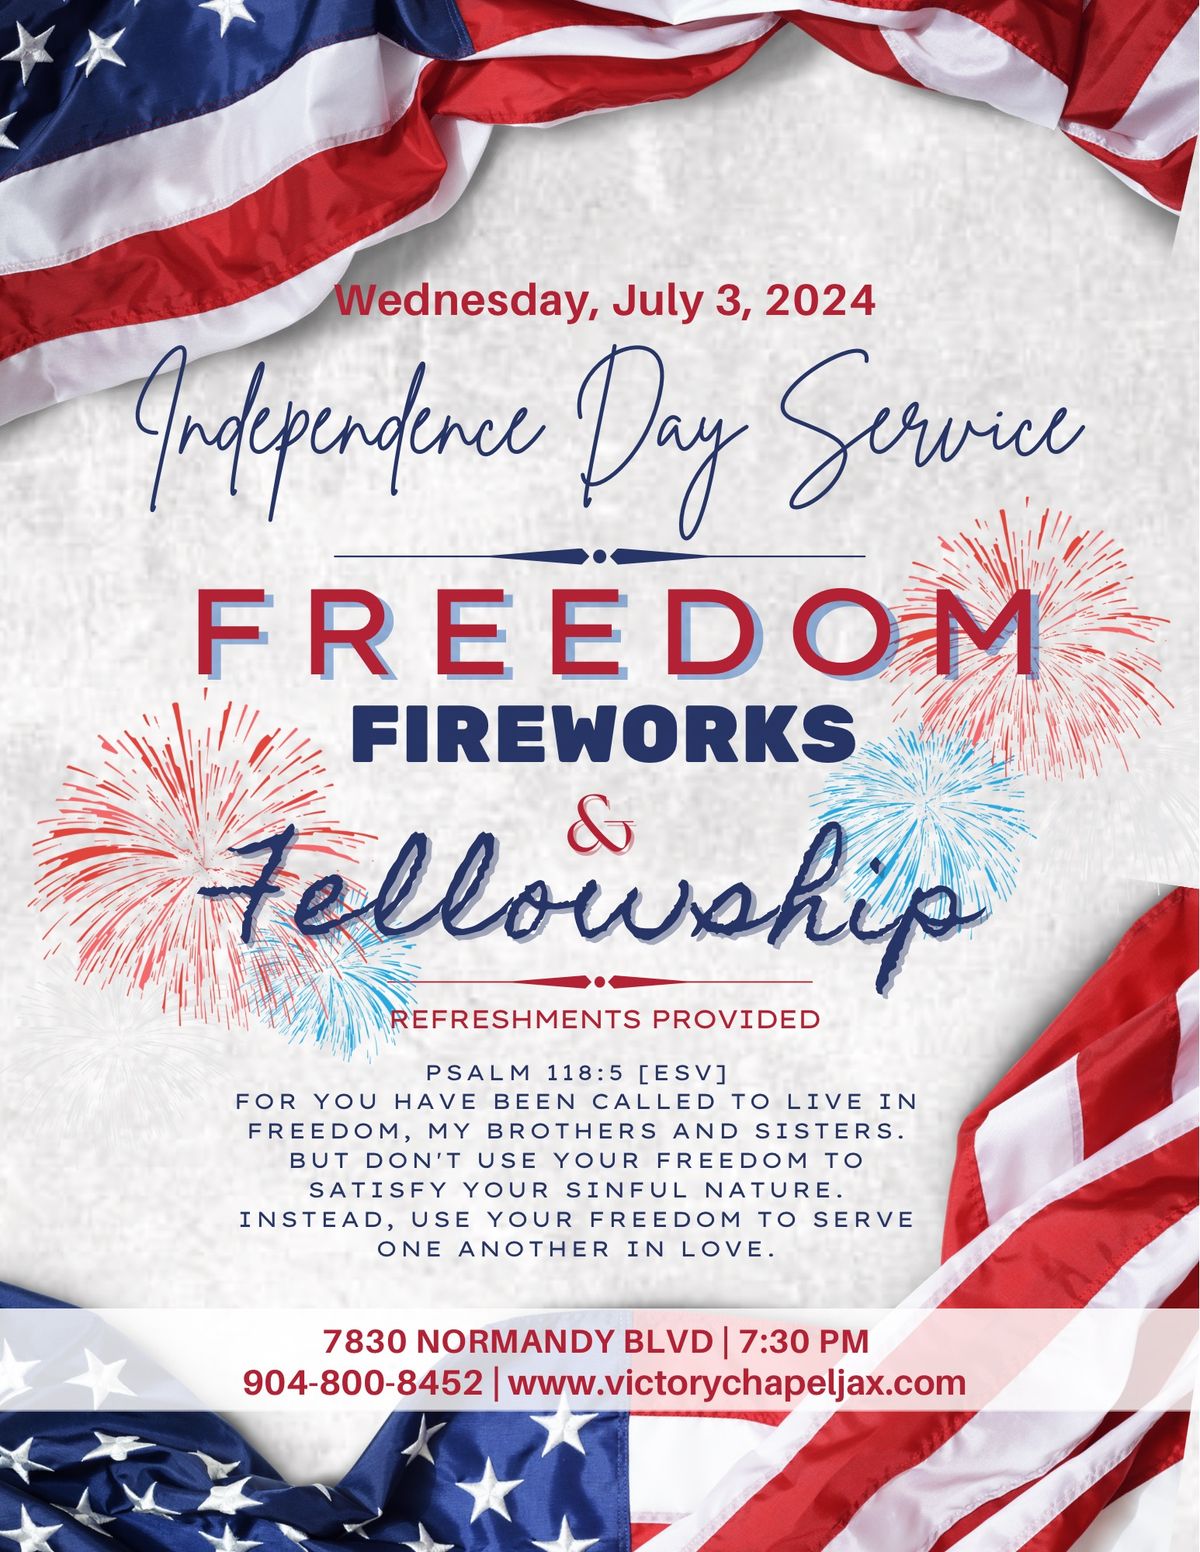 Freedom, Fireworks & Fellowship \ud83c\uddfa\ud83c\uddf8 